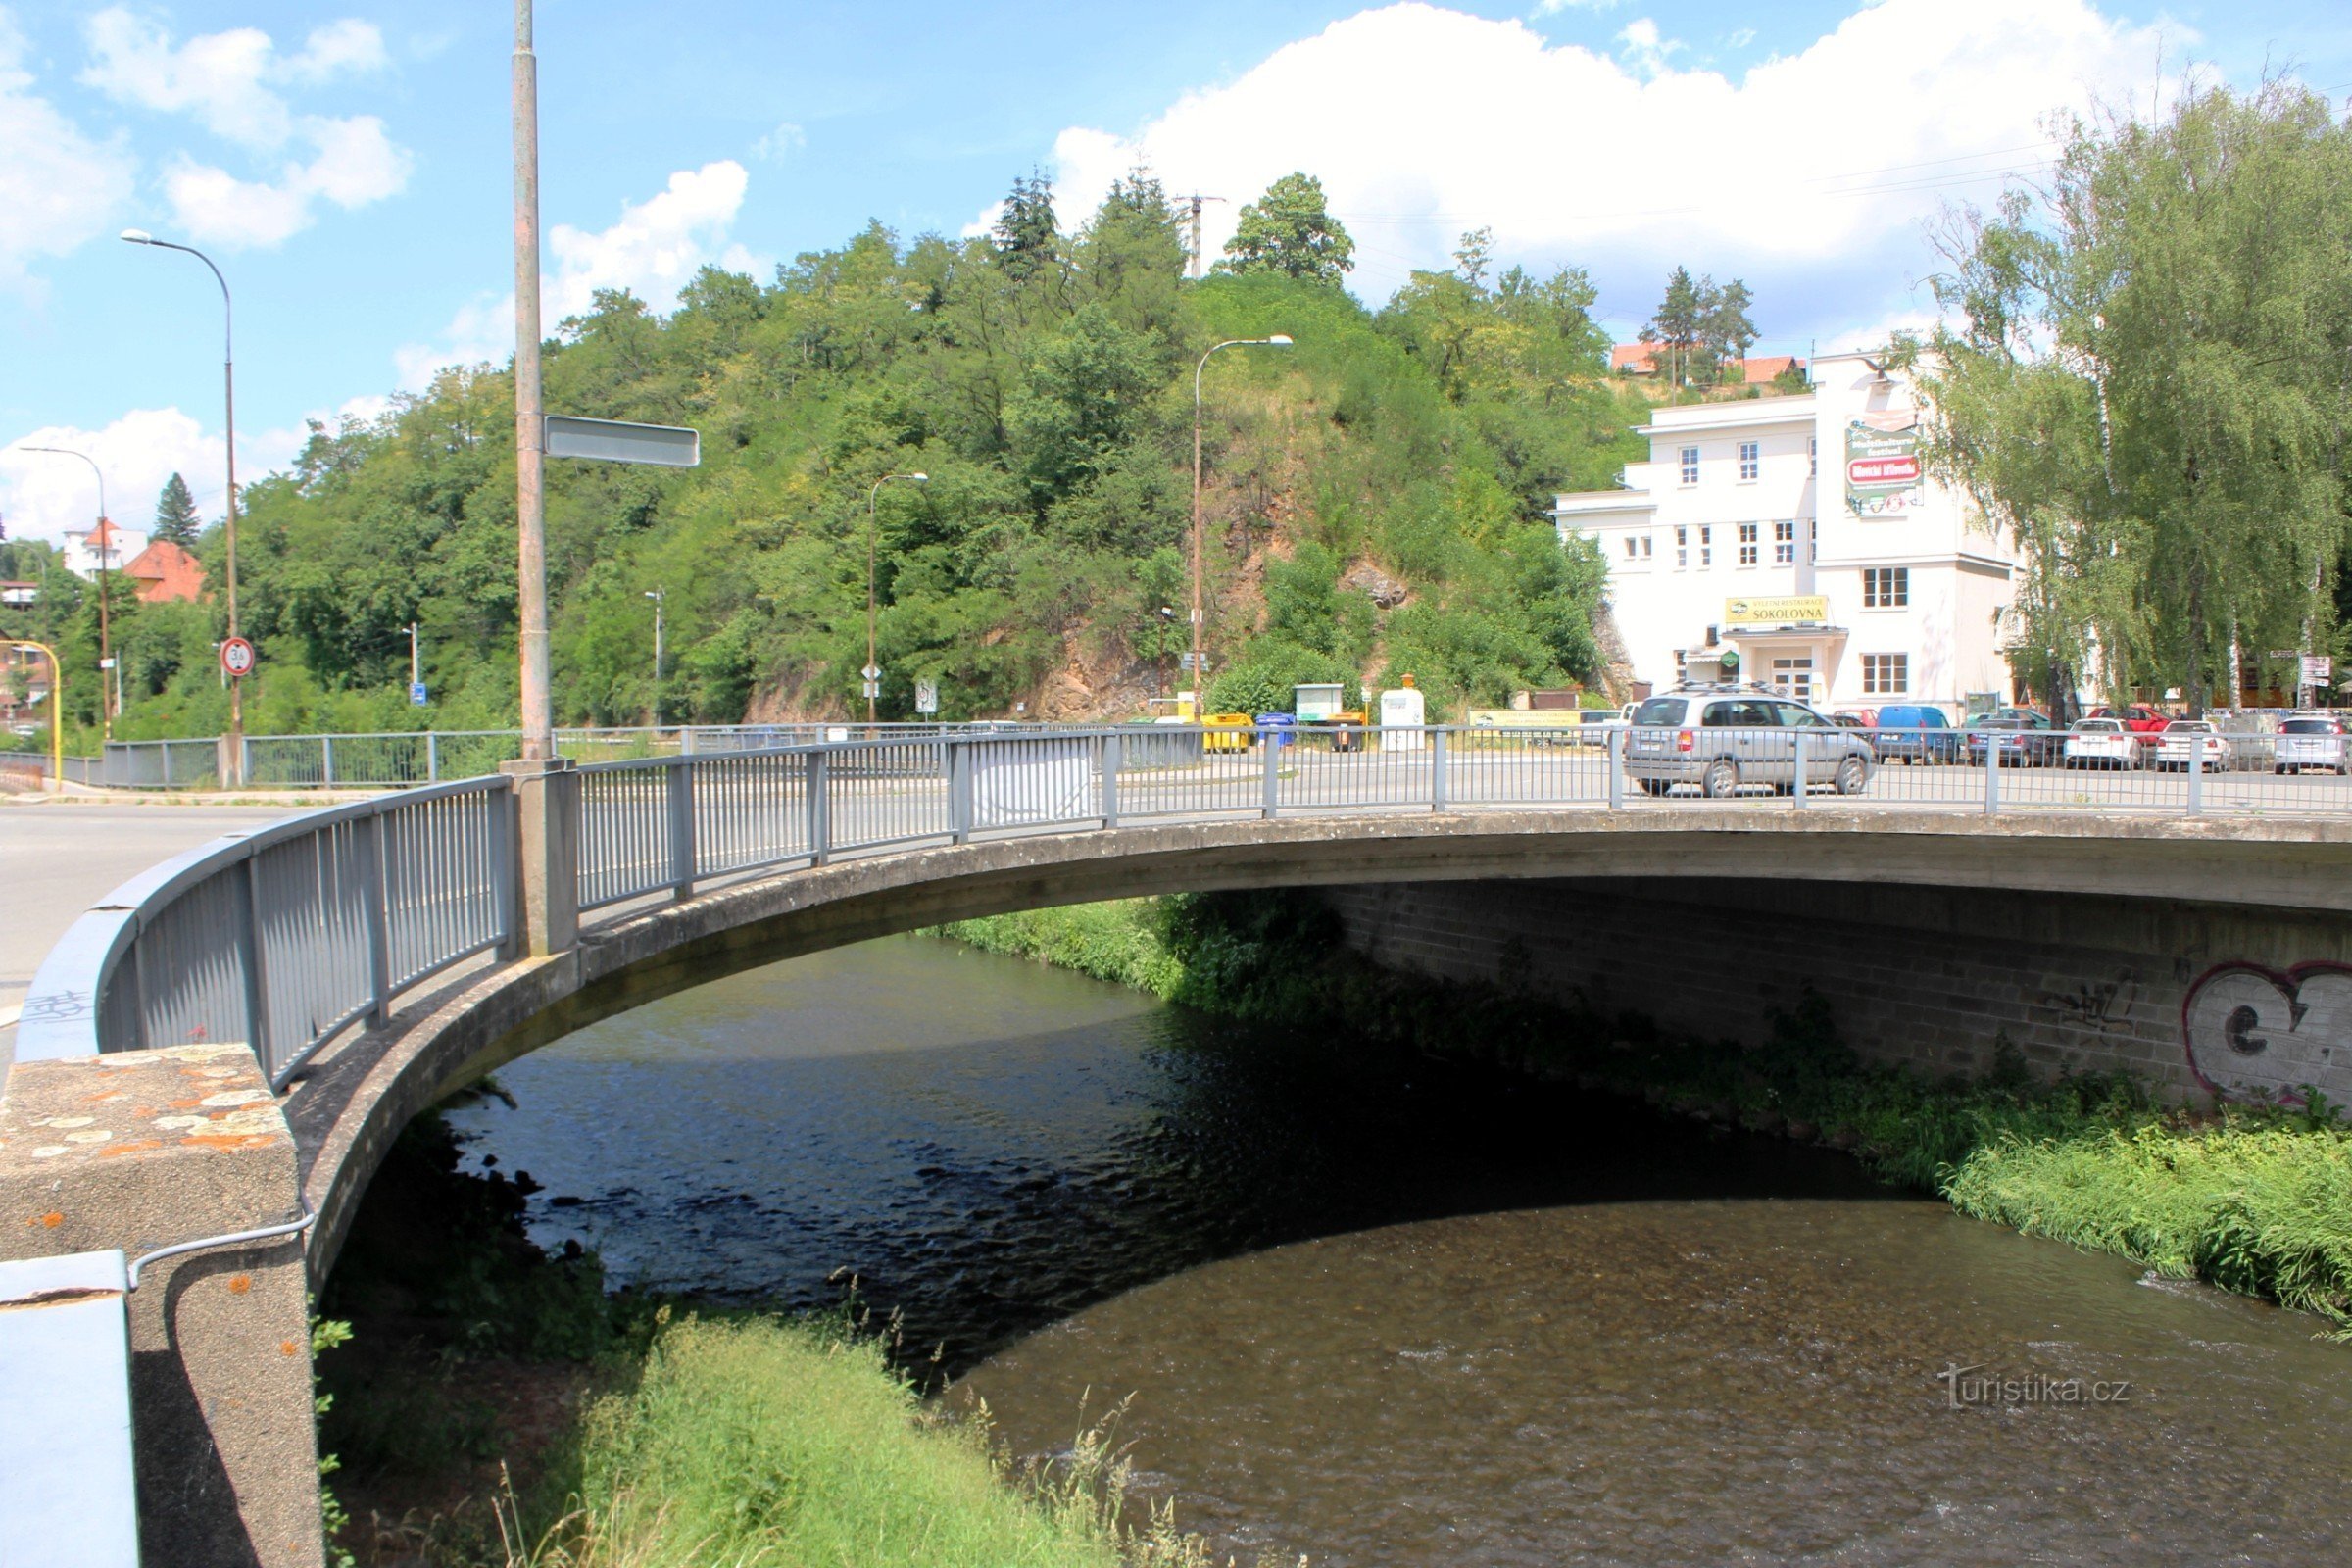 Cầu bắc qua sông Svitava gần Sokolovna